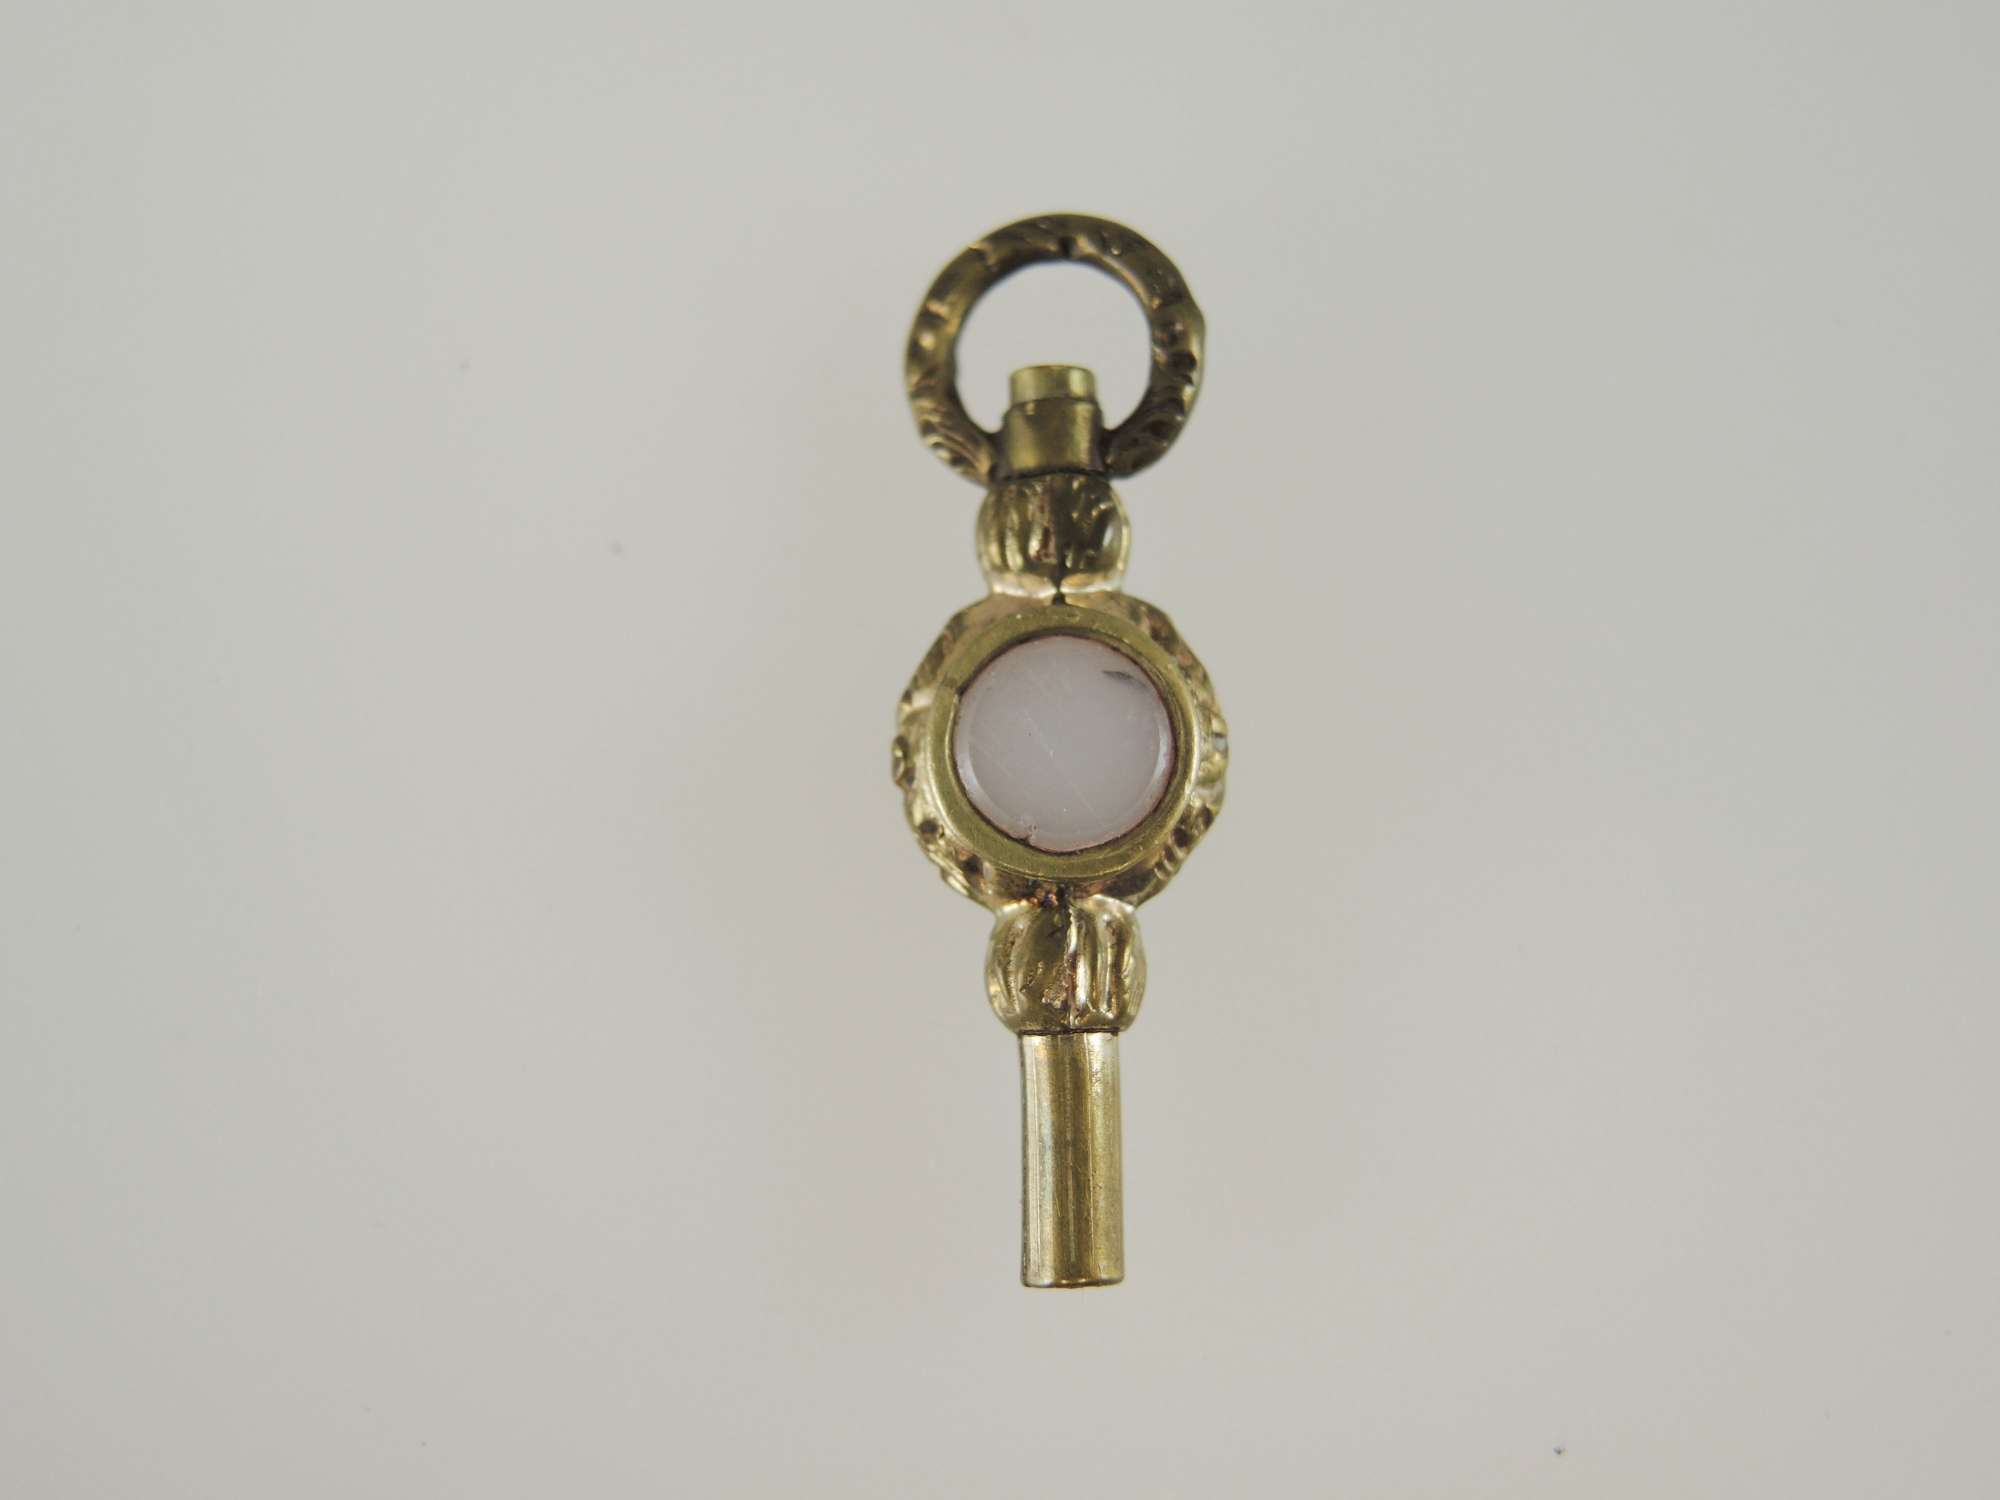 Antique pocket watch key c1880